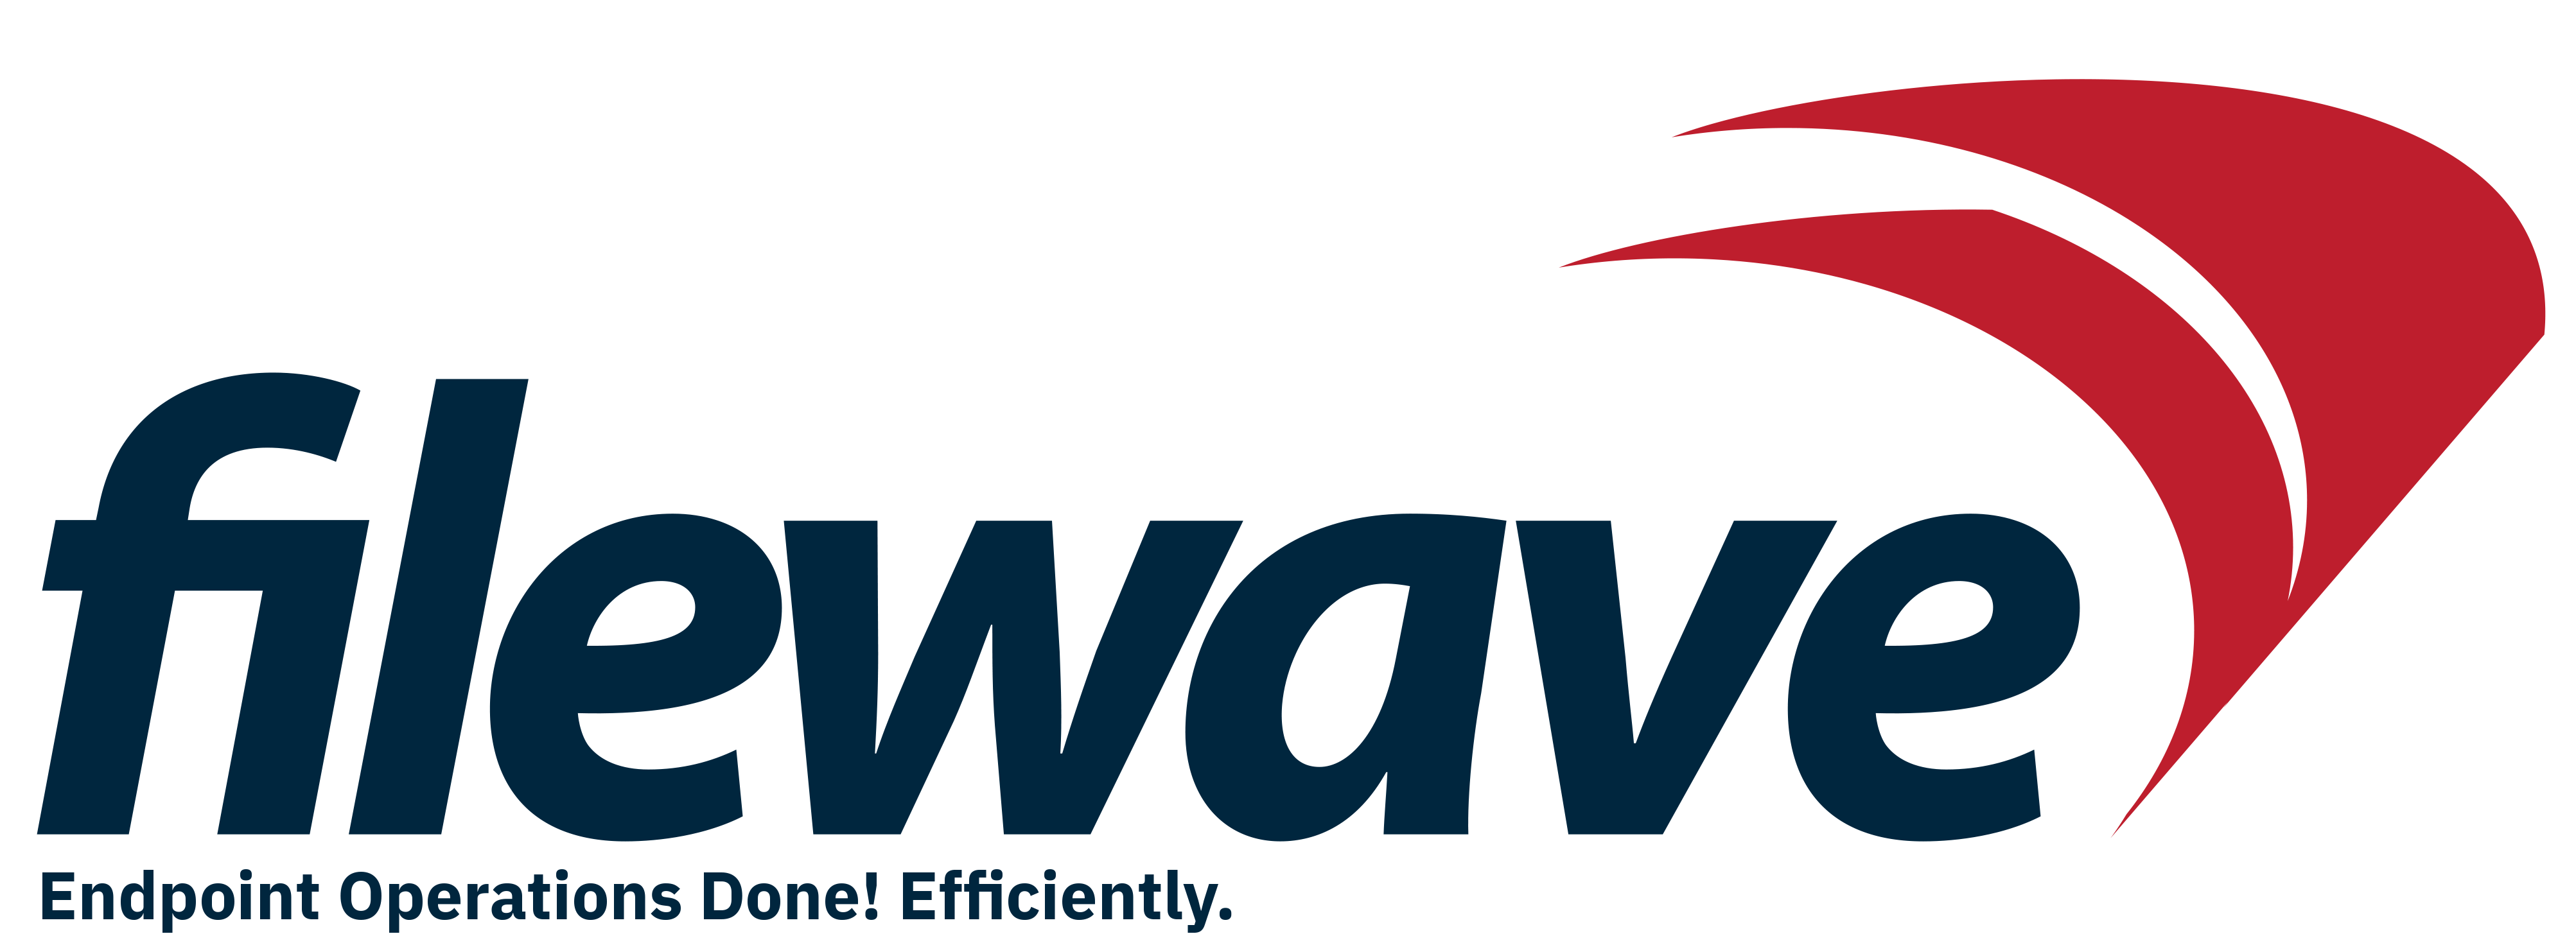 FileWave Announces Major Release of FileWave Version 15